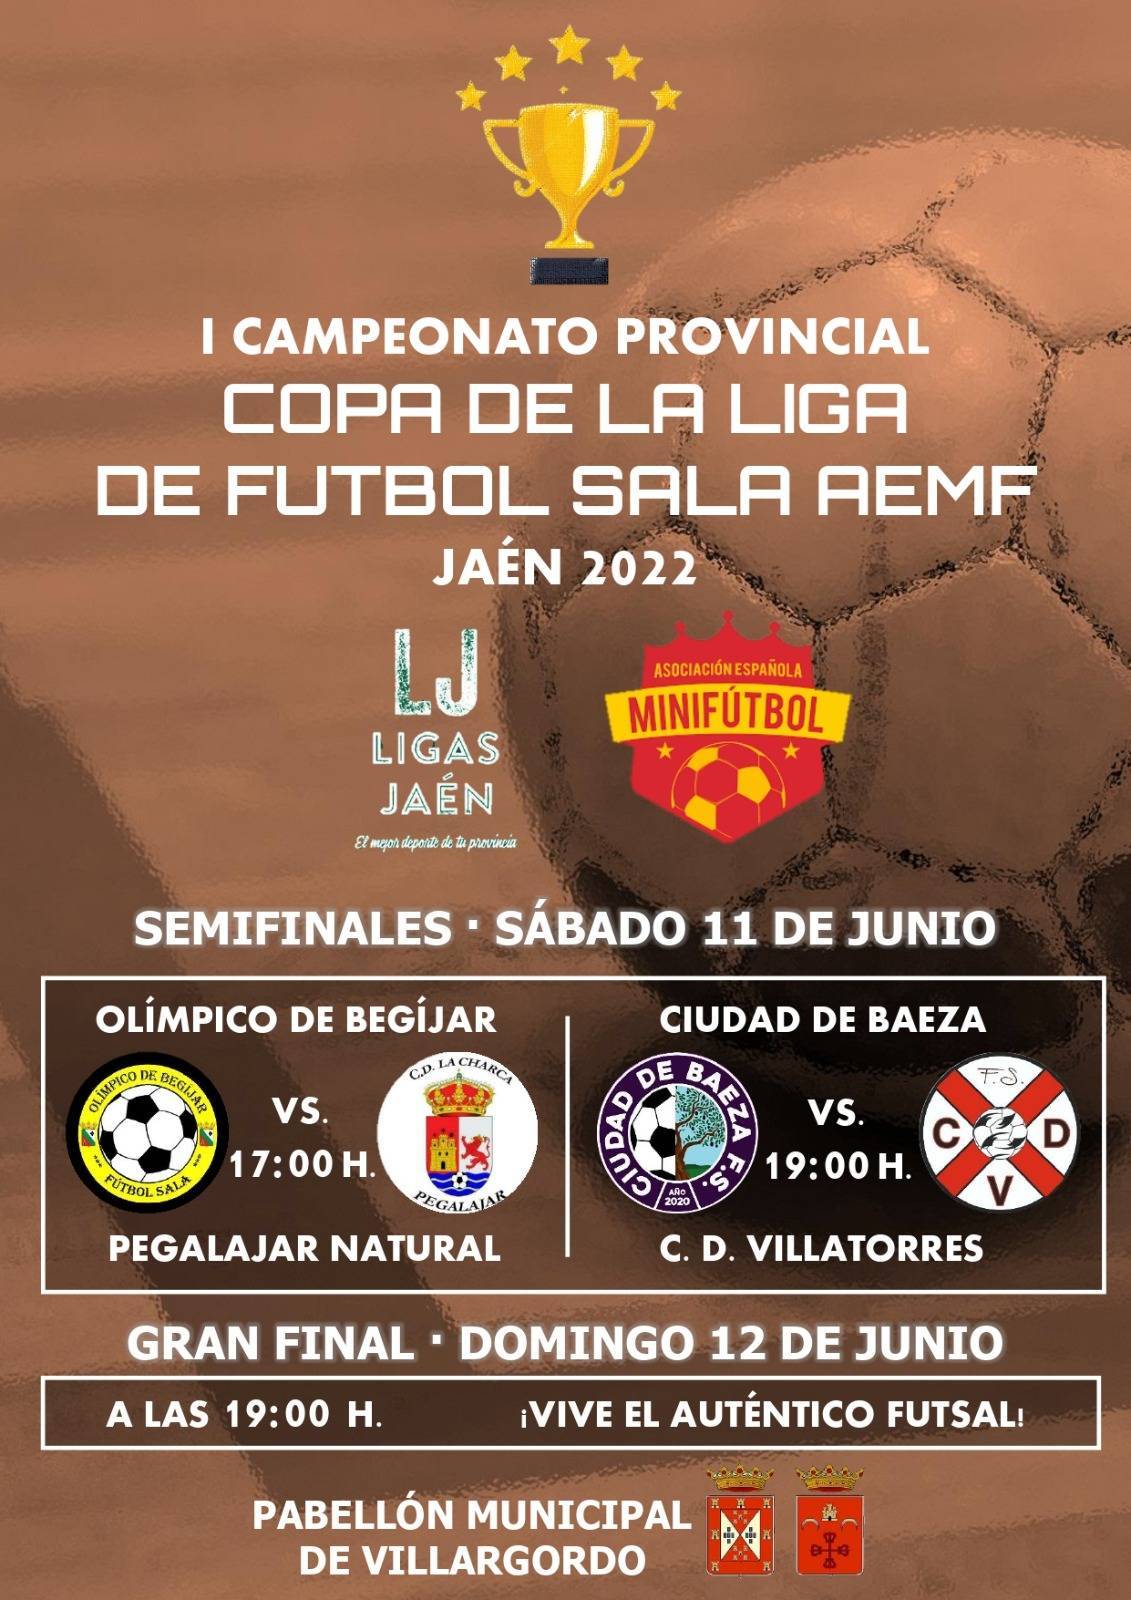 I Copa de la Liga de Fútbol Sala AEMF - Villargordo (Jaén)